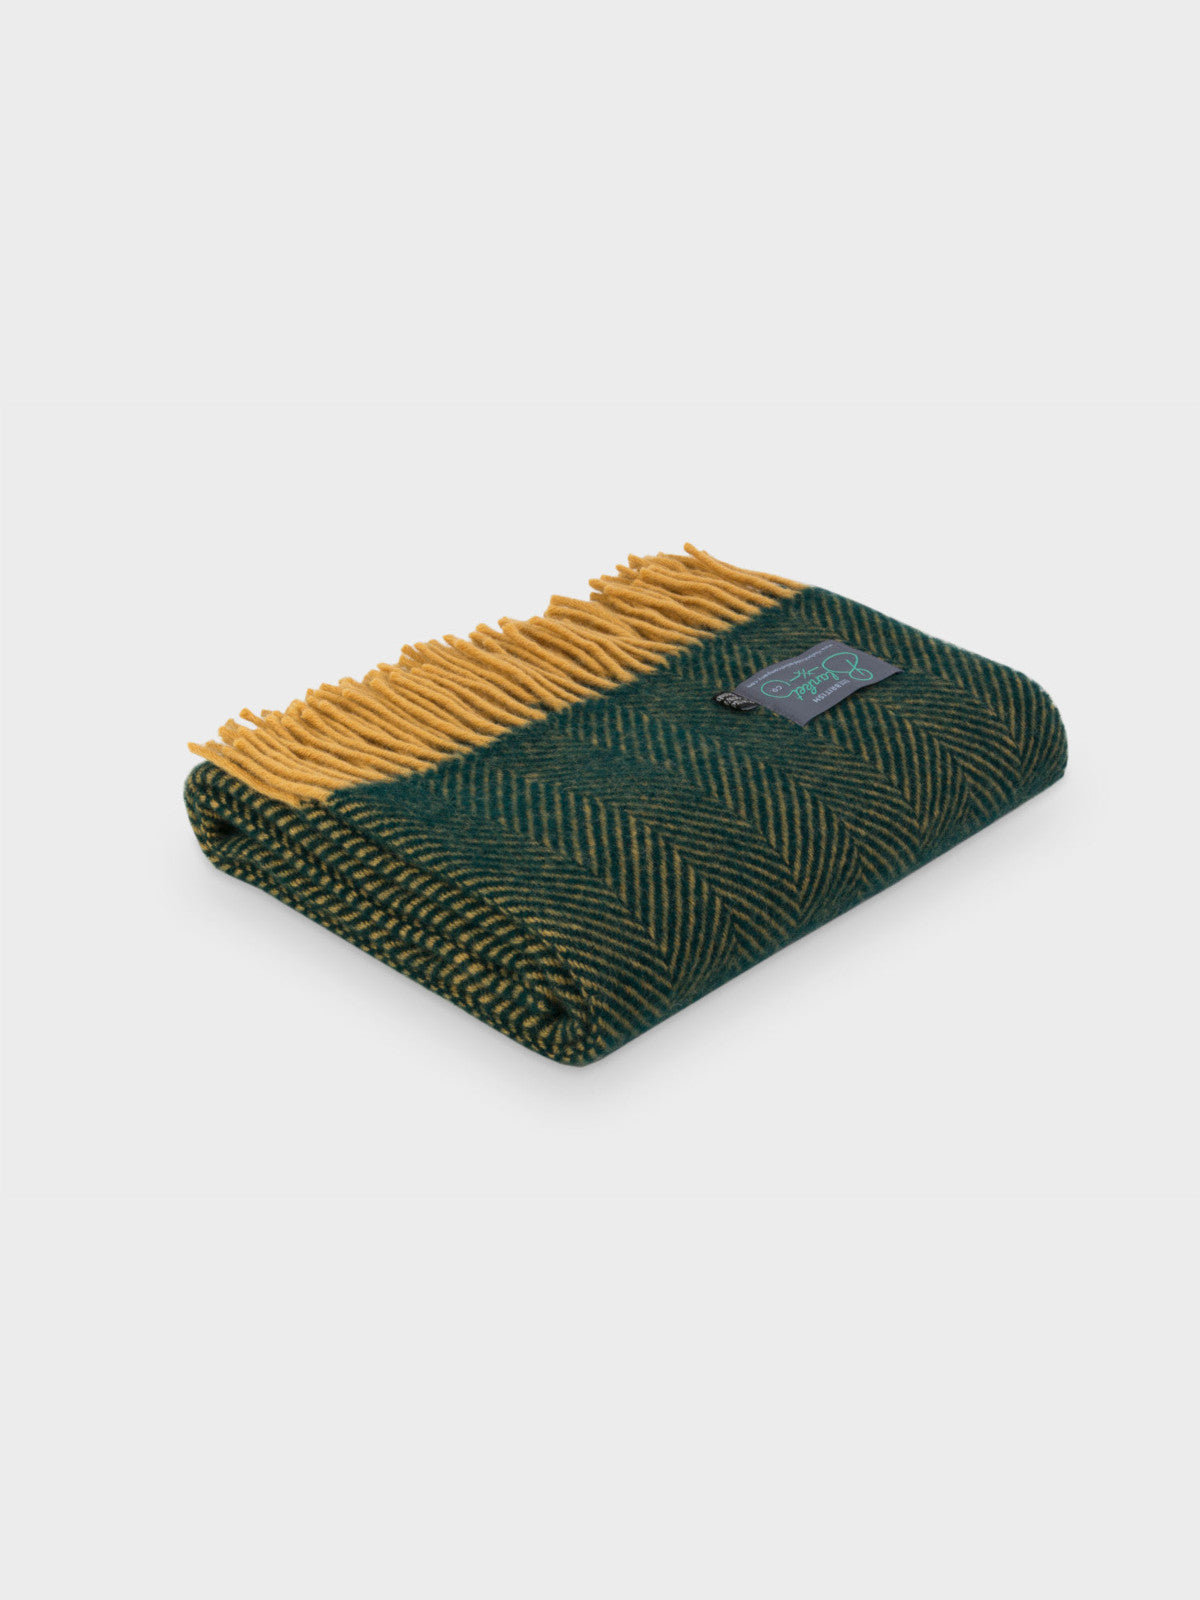 A folded green and mustard herringbone wool throw by The British Blanket Company.